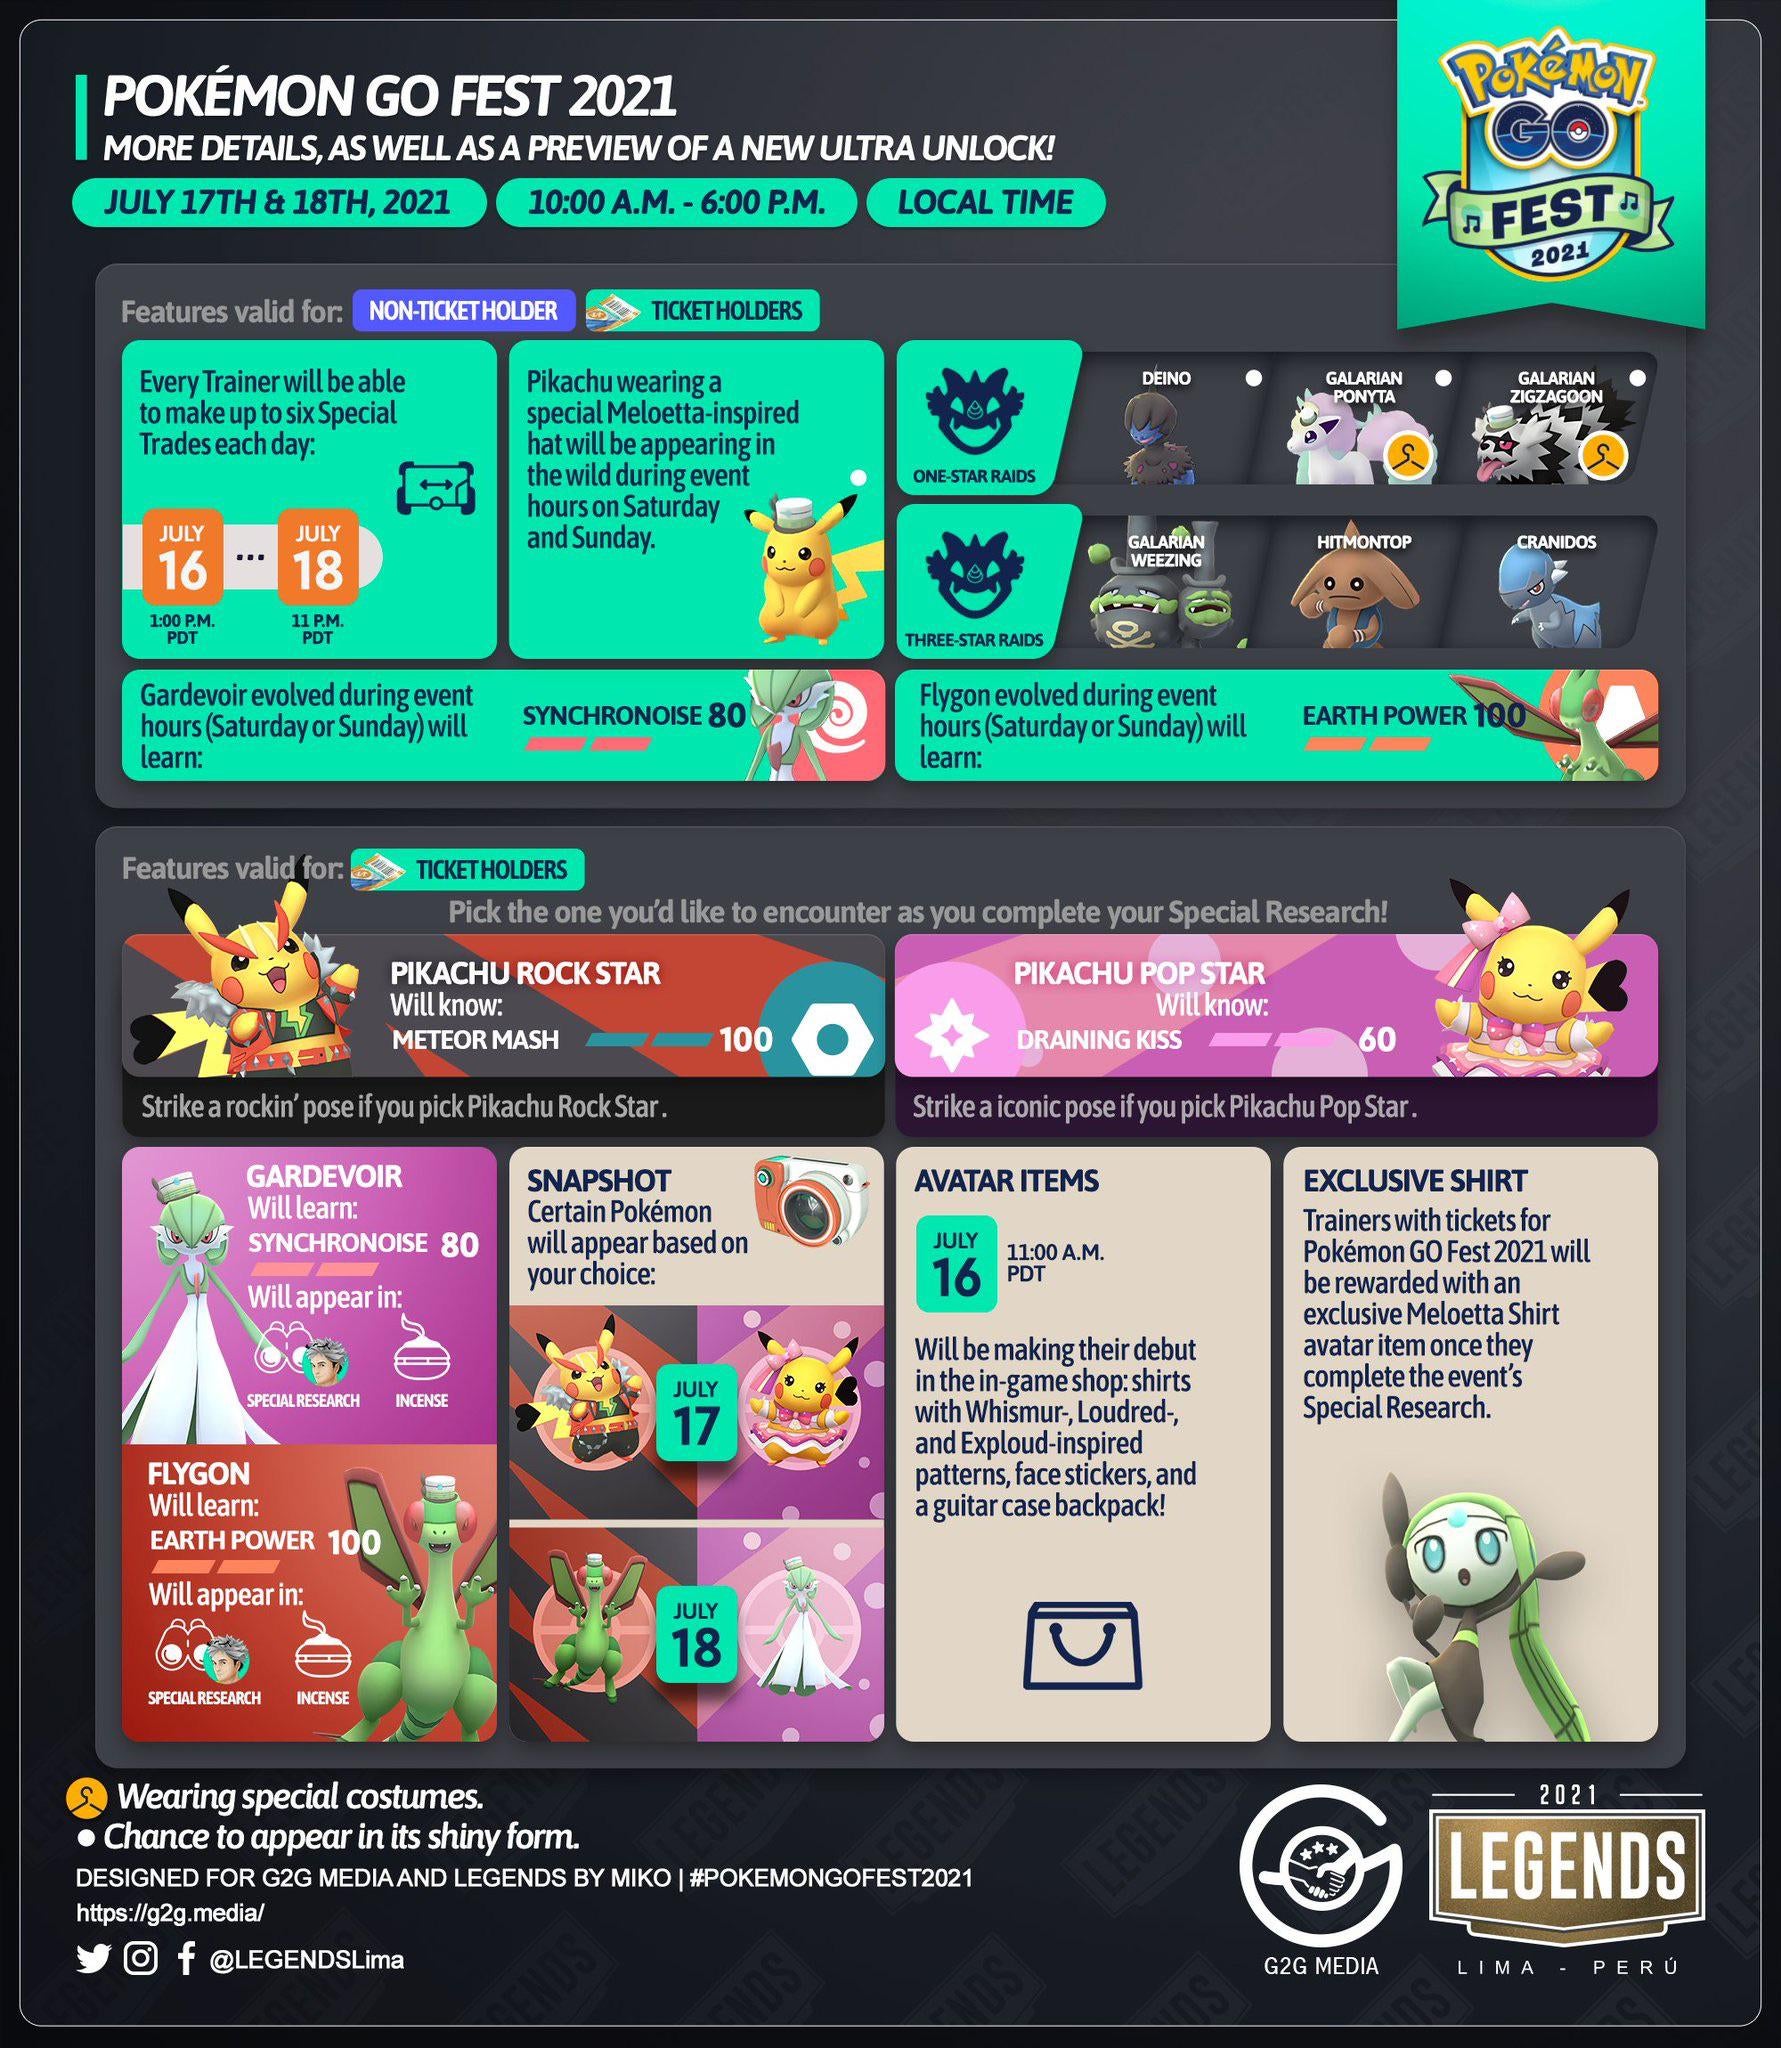 Pokemon Go Meloetta Raid Guide